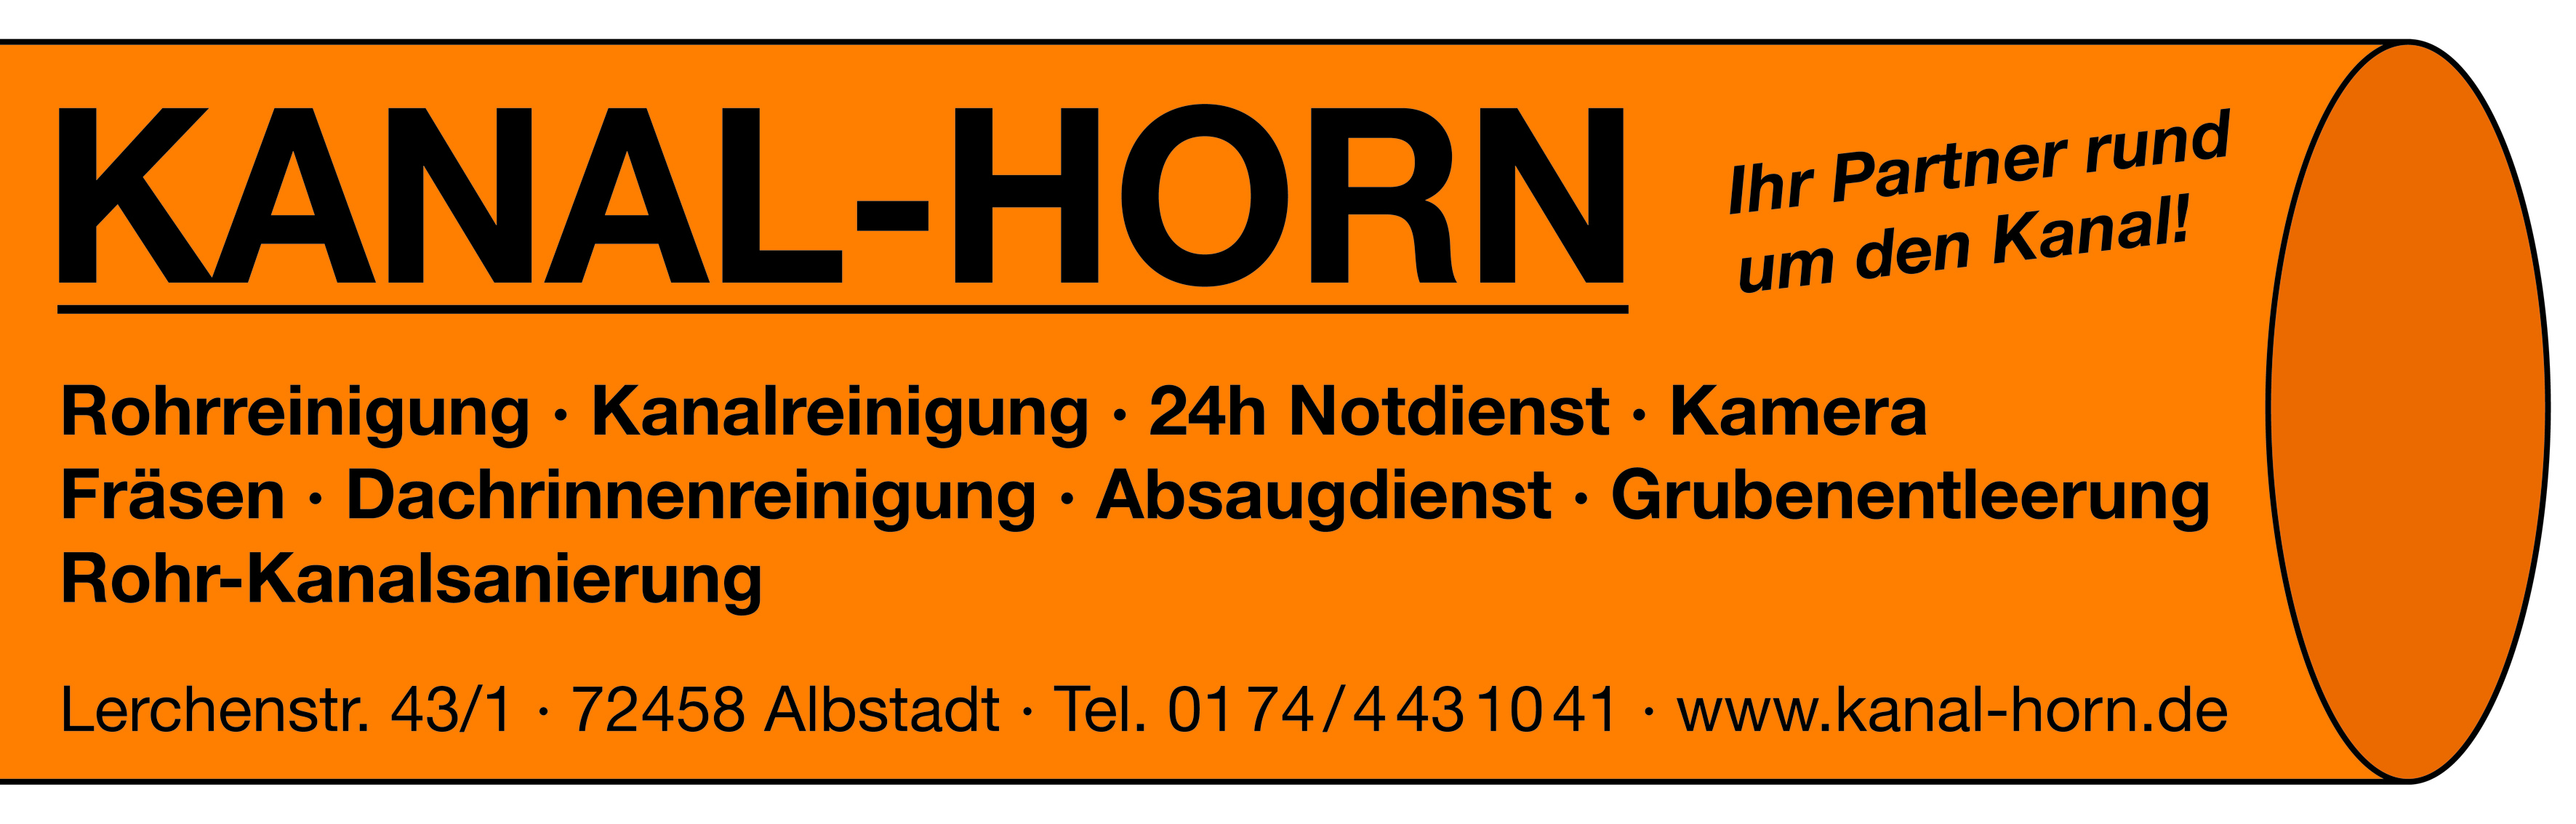 Bild 3 Kanal-Horn, Jügen Horn, 24h Notdienst in Albstadt